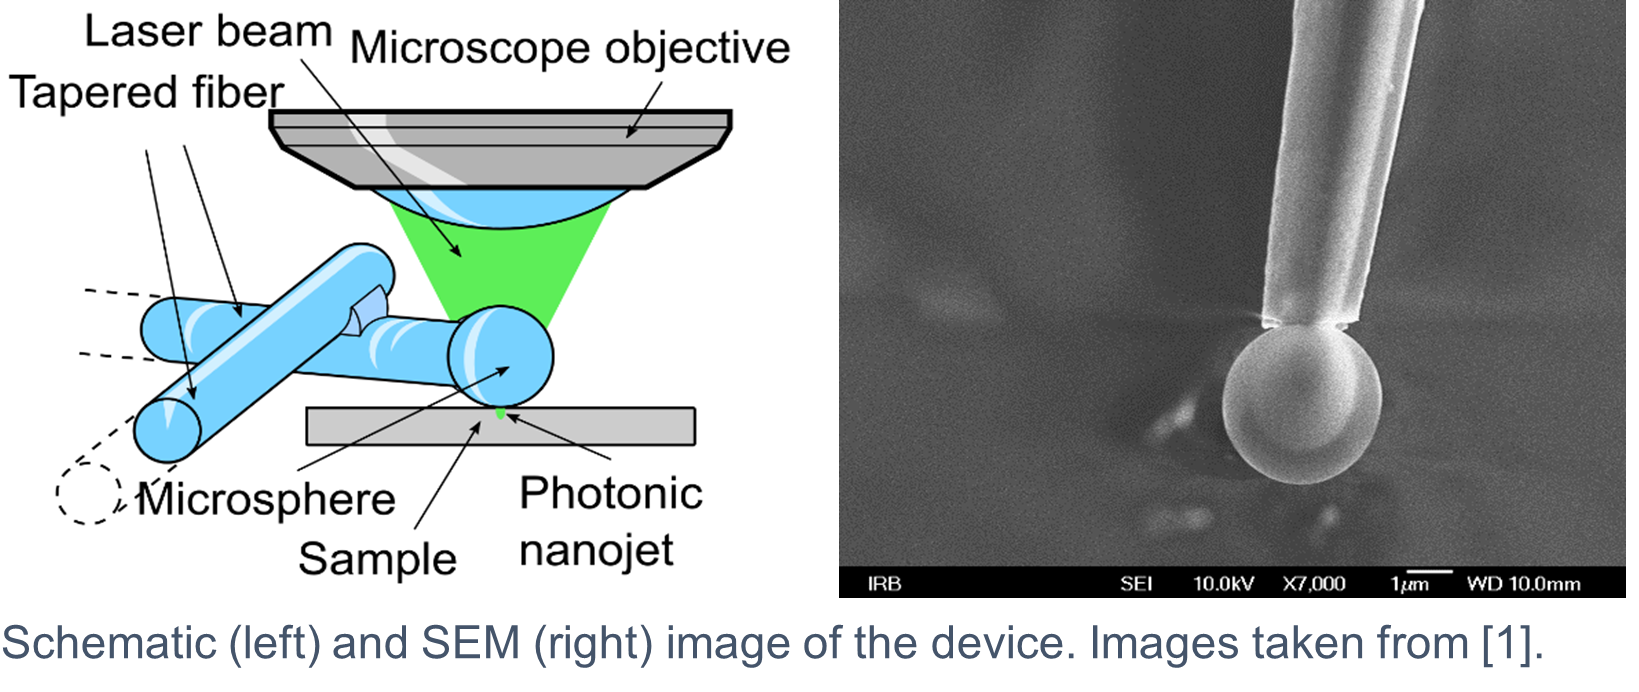 Optical device for enhanced spectroscopy and microscopy based on photonic nanojet